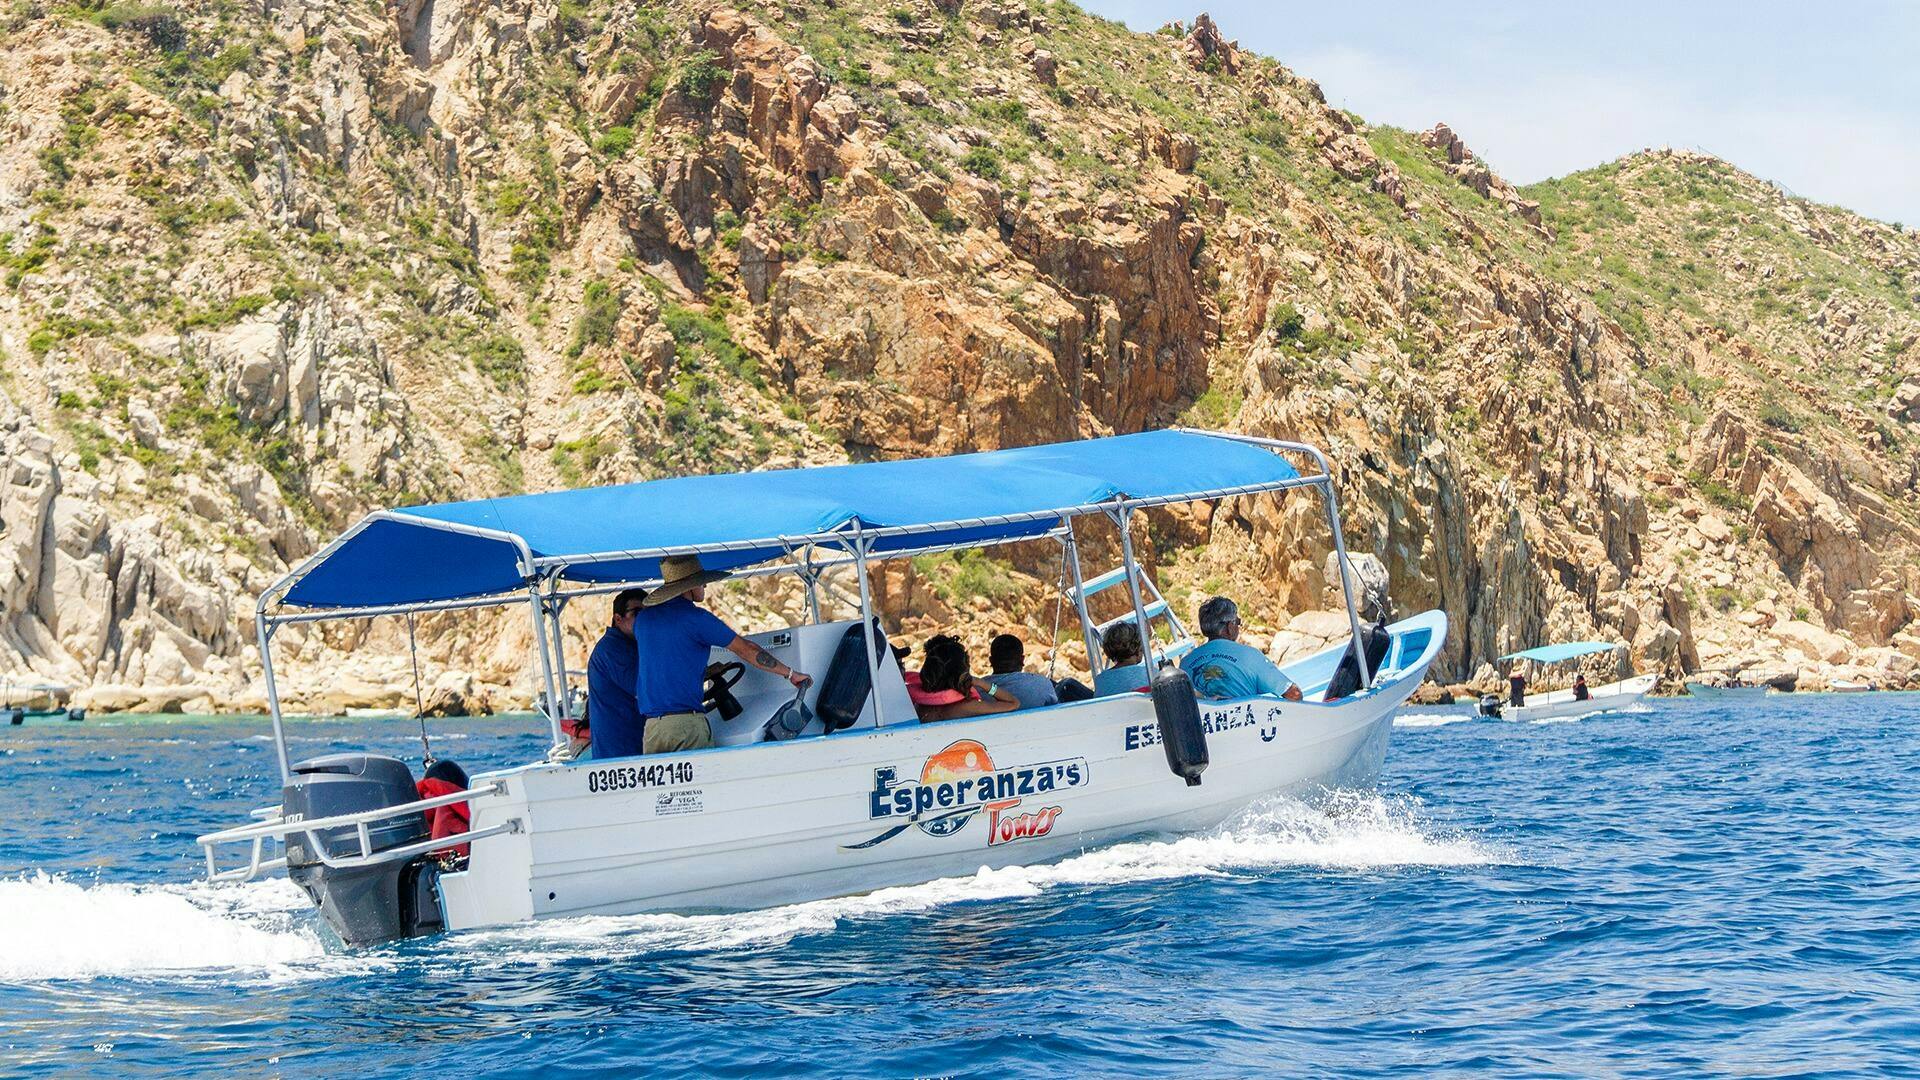 Cabo San Lucas City Tour with Boat Trip